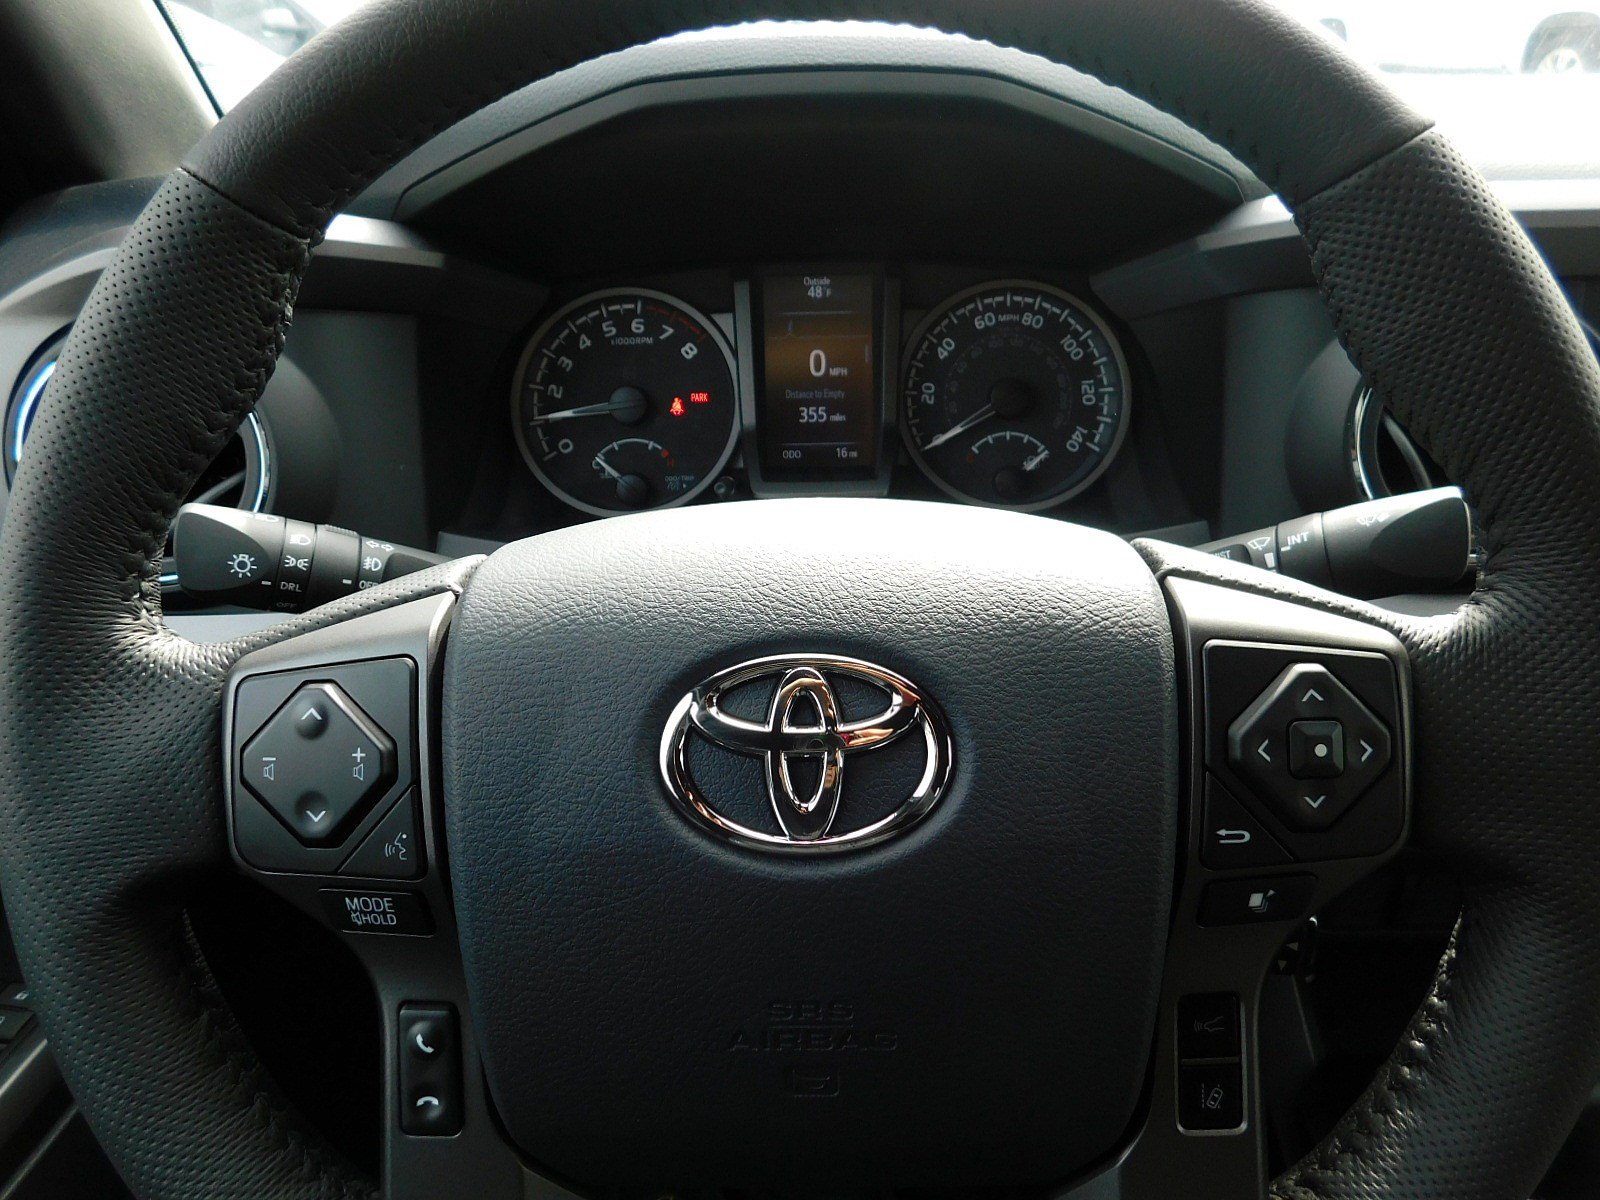 New 2020 Toyota Tacoma TRD Sport Access Cab 6' Bed V6 MT ...